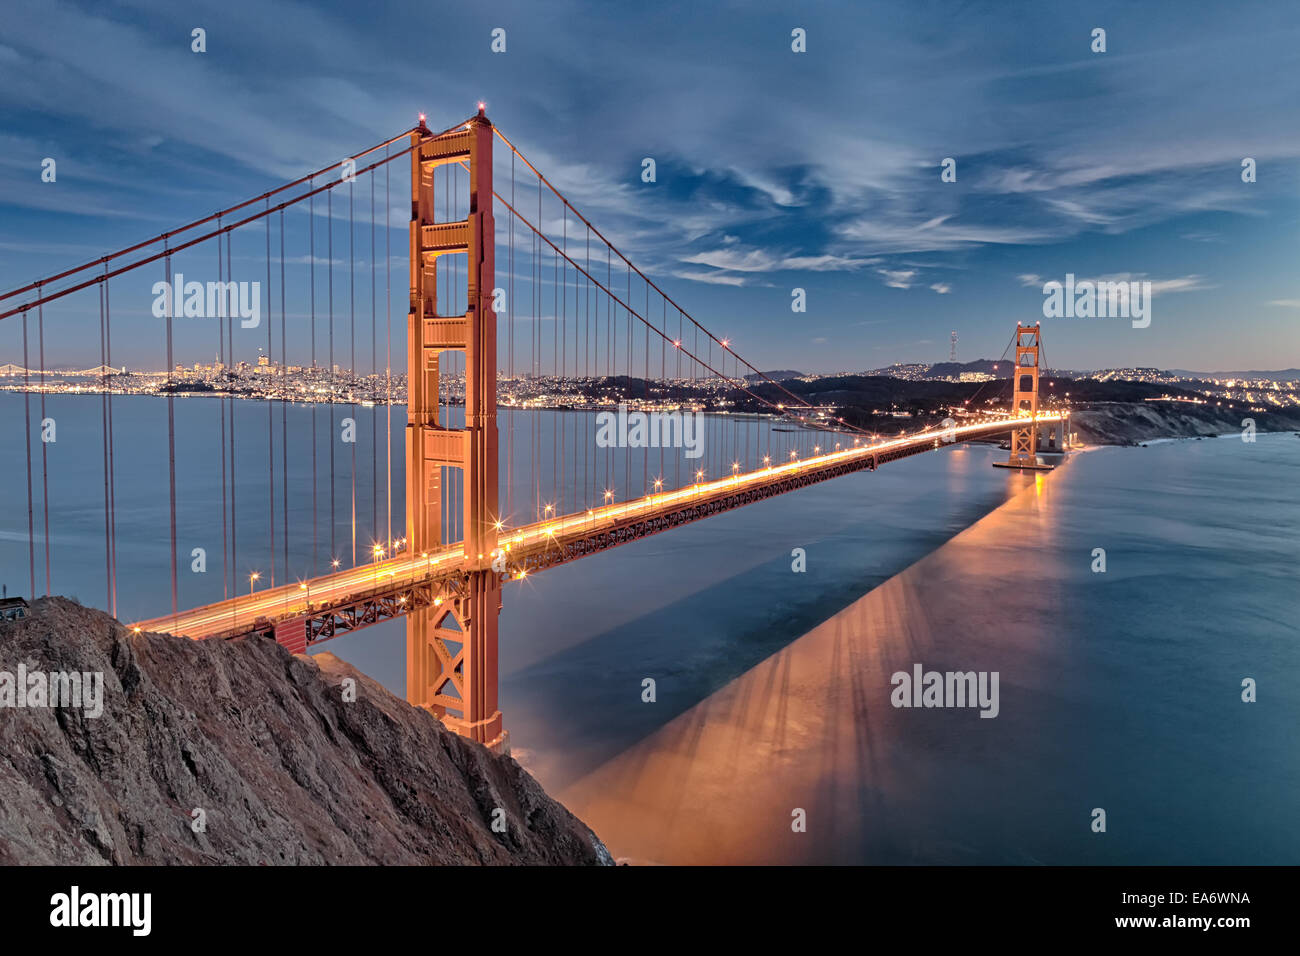 The Golden Gate Bridge in San Francisco bay Stock Photo